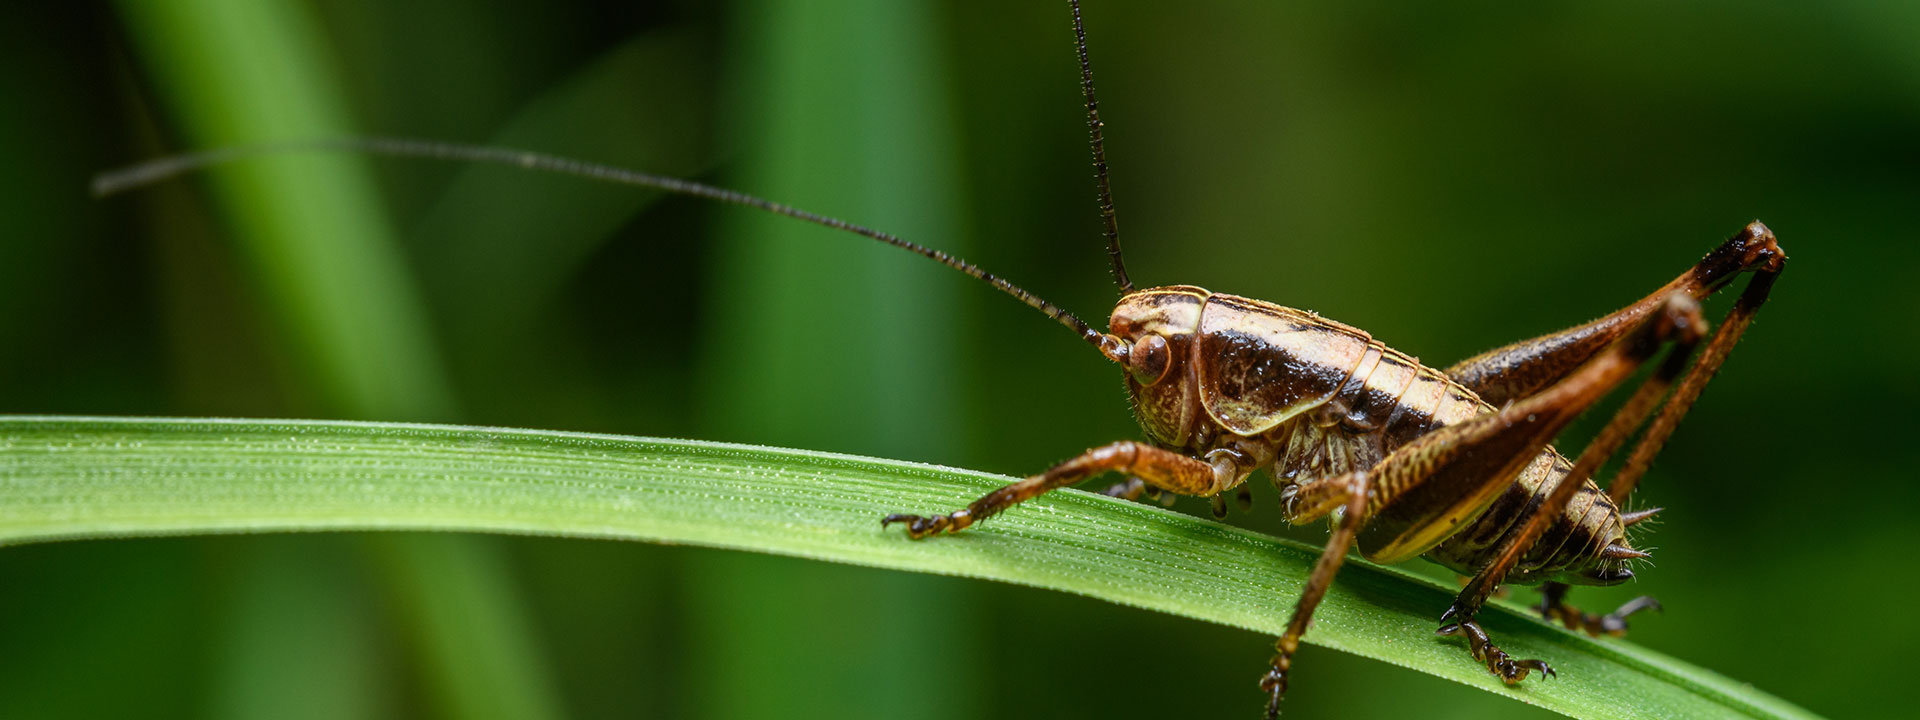 A closeup of a cricket on a blade of grass.